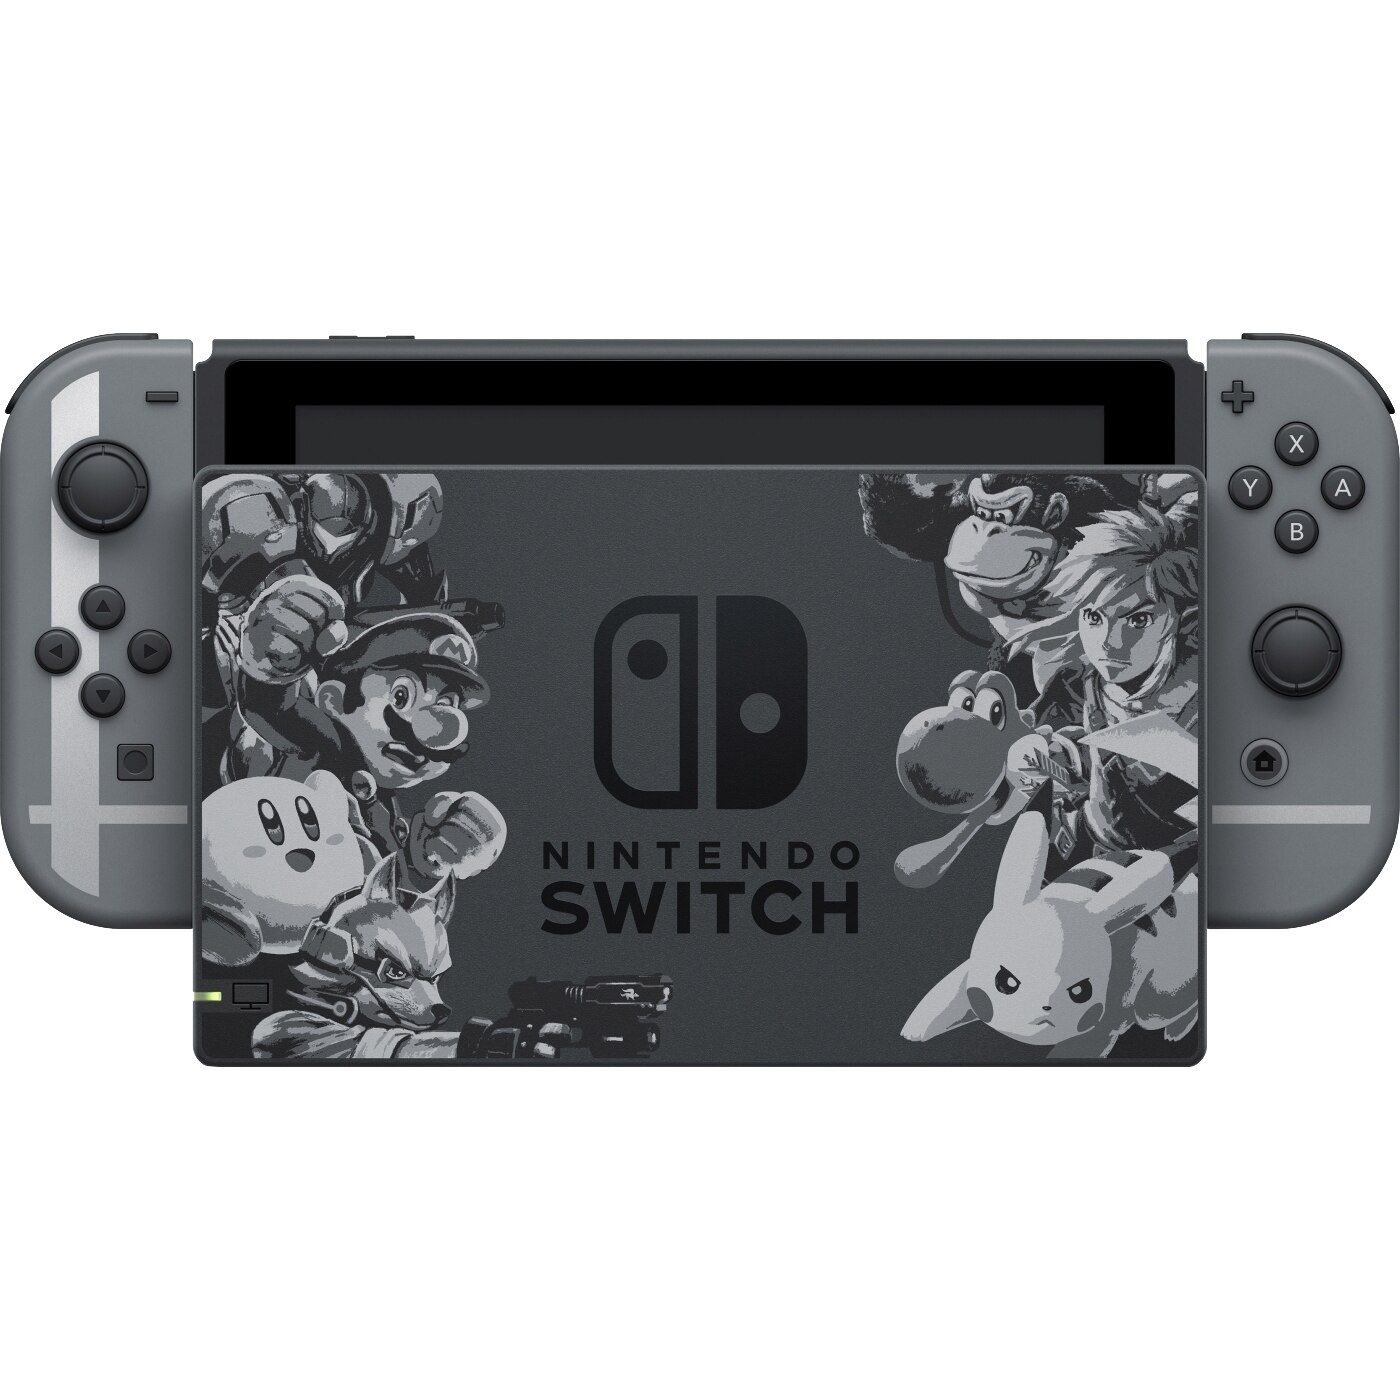 Nintendo switch smash